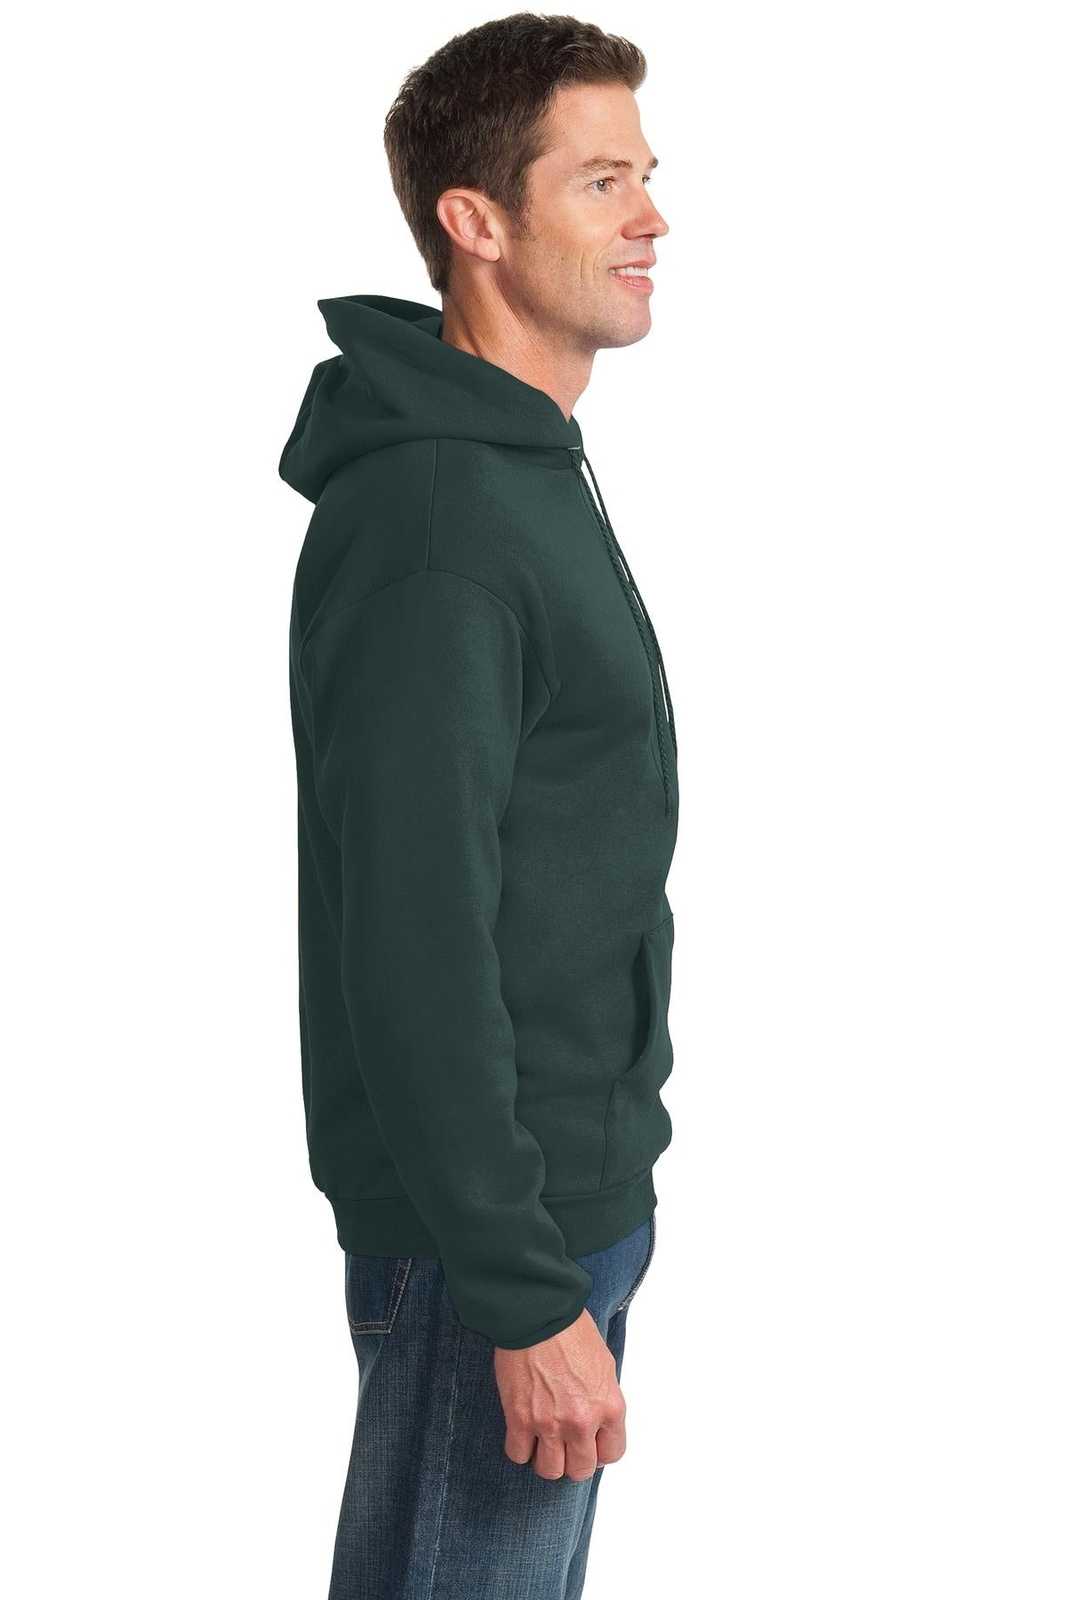 Port &amp; Company PC90H Essential Fleece Pullover Hooded Sweatshirt - Dark Green - HIT a Double - 3